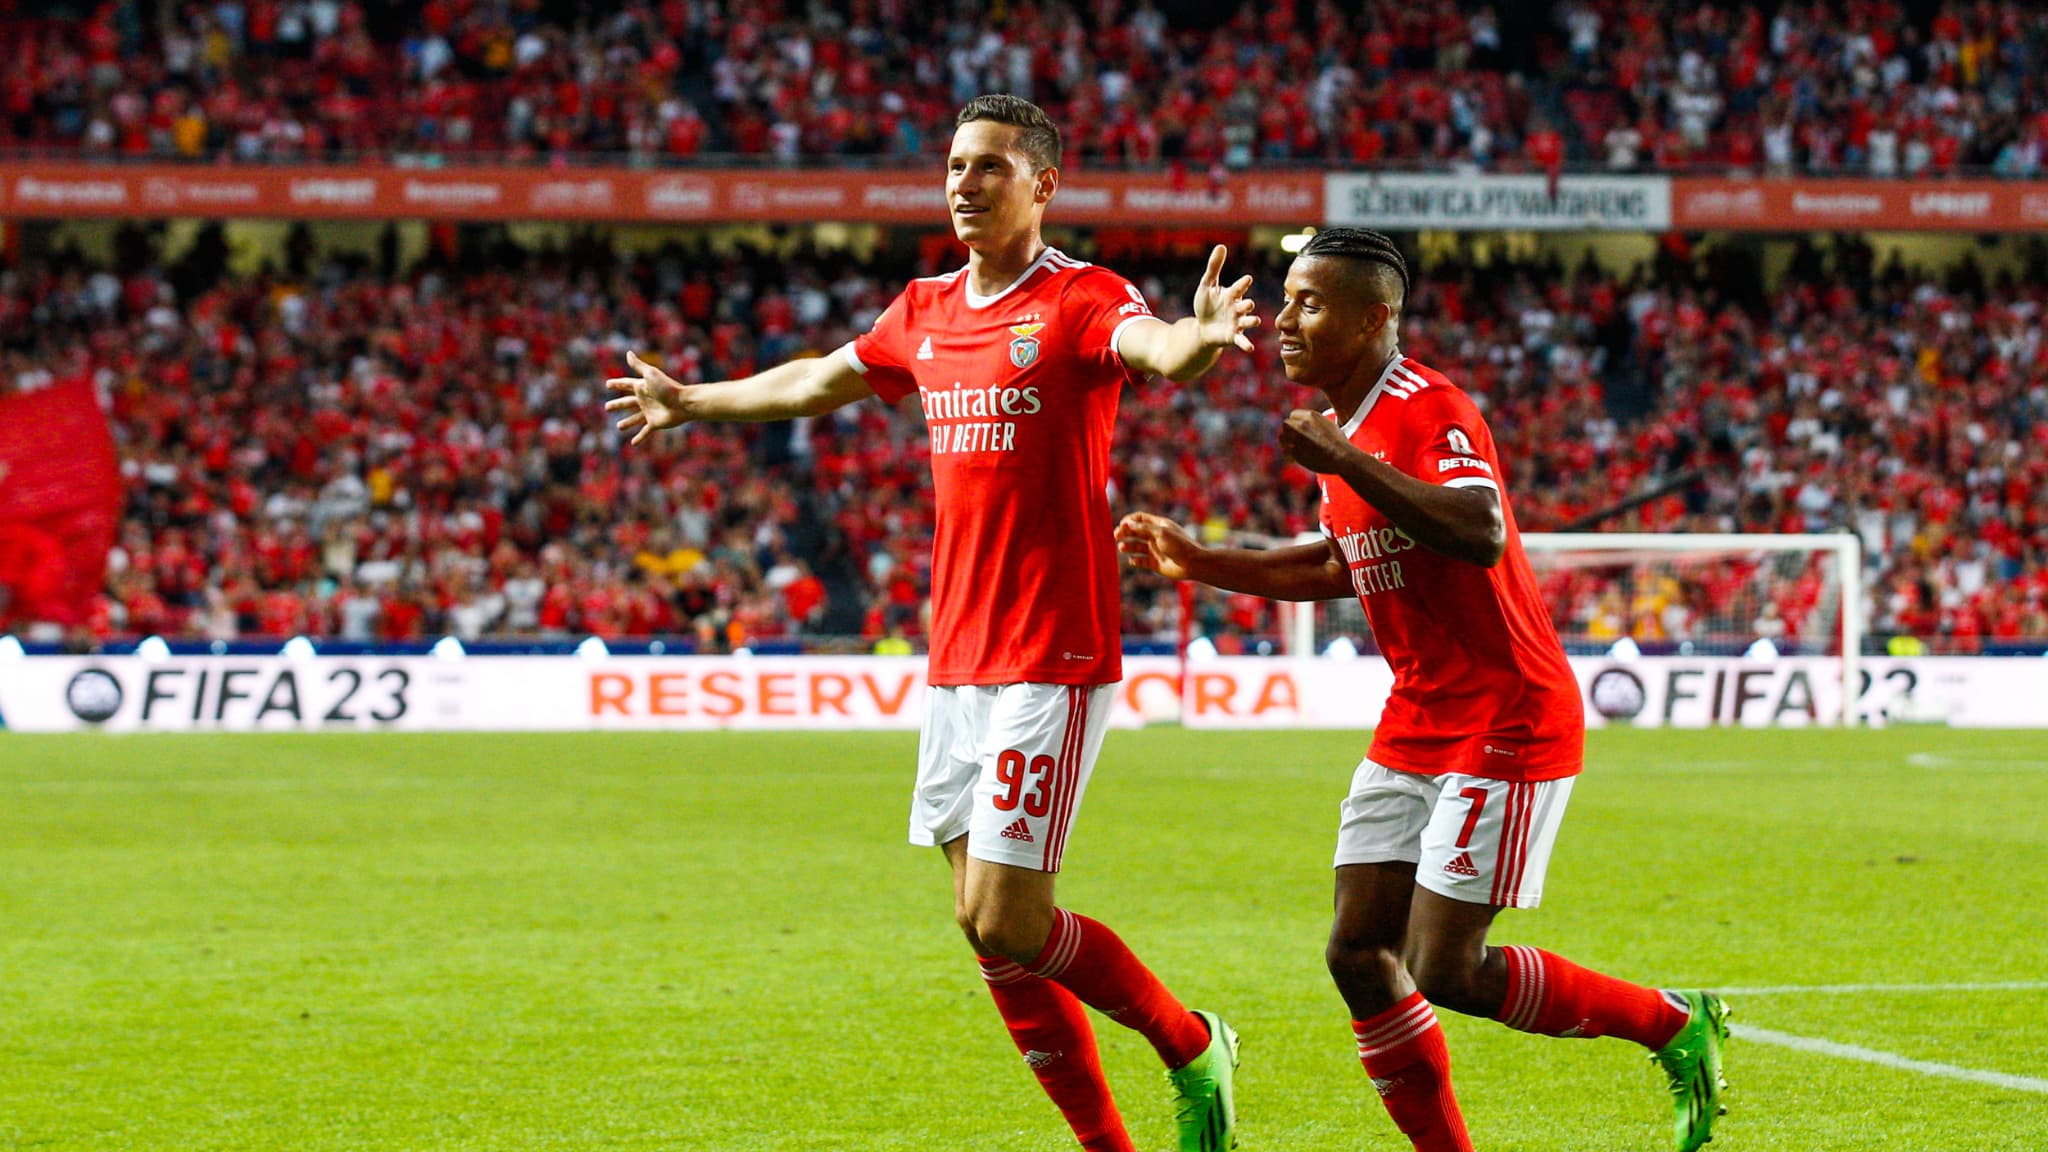 Draxler’s amazing goal with Benfica